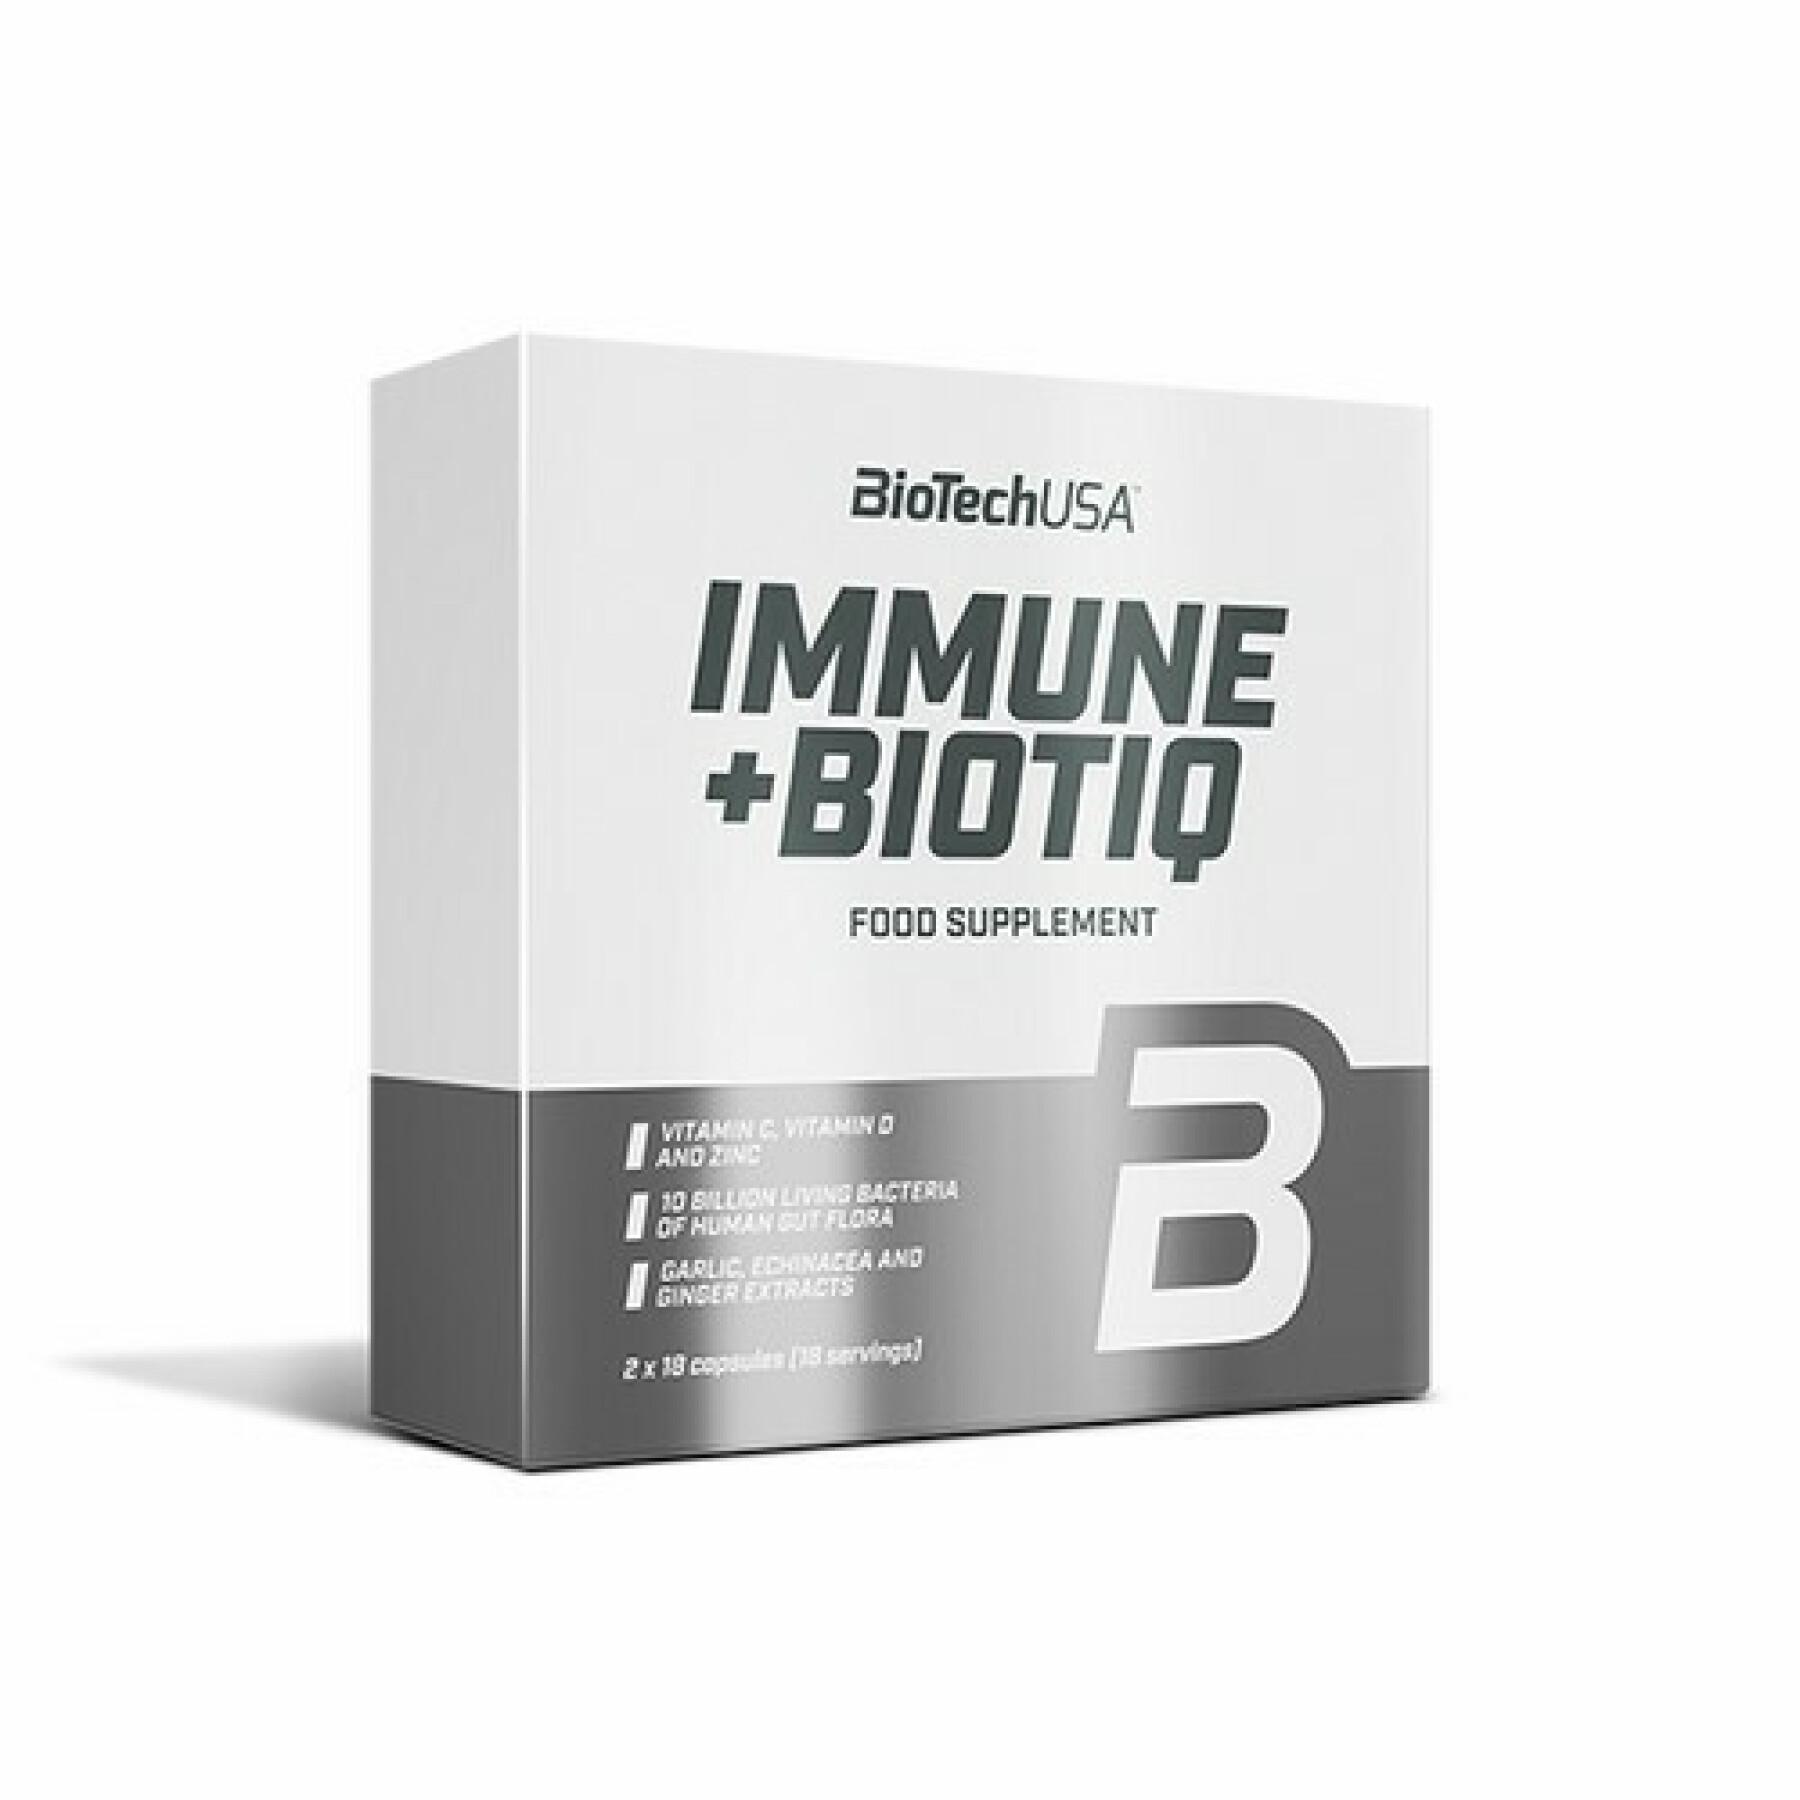 Lot de 24 pots de vitamine immunitaire + biotiq Biotech USA - 36 Gélul